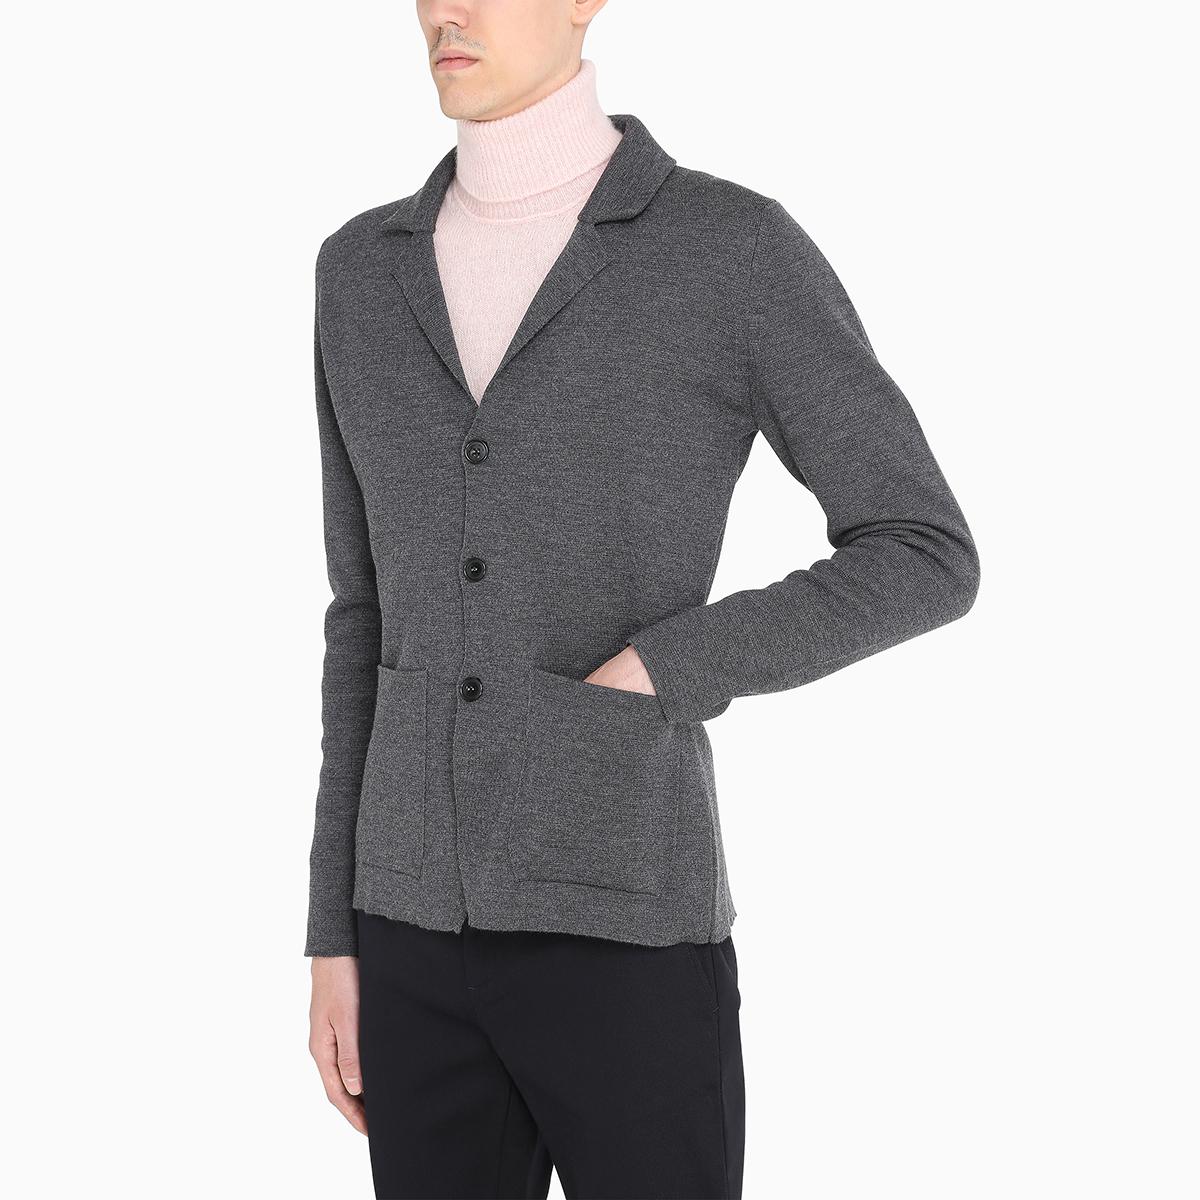 Roberto Collina Wool Grey Long Cardigan in Gray for Men - Lyst